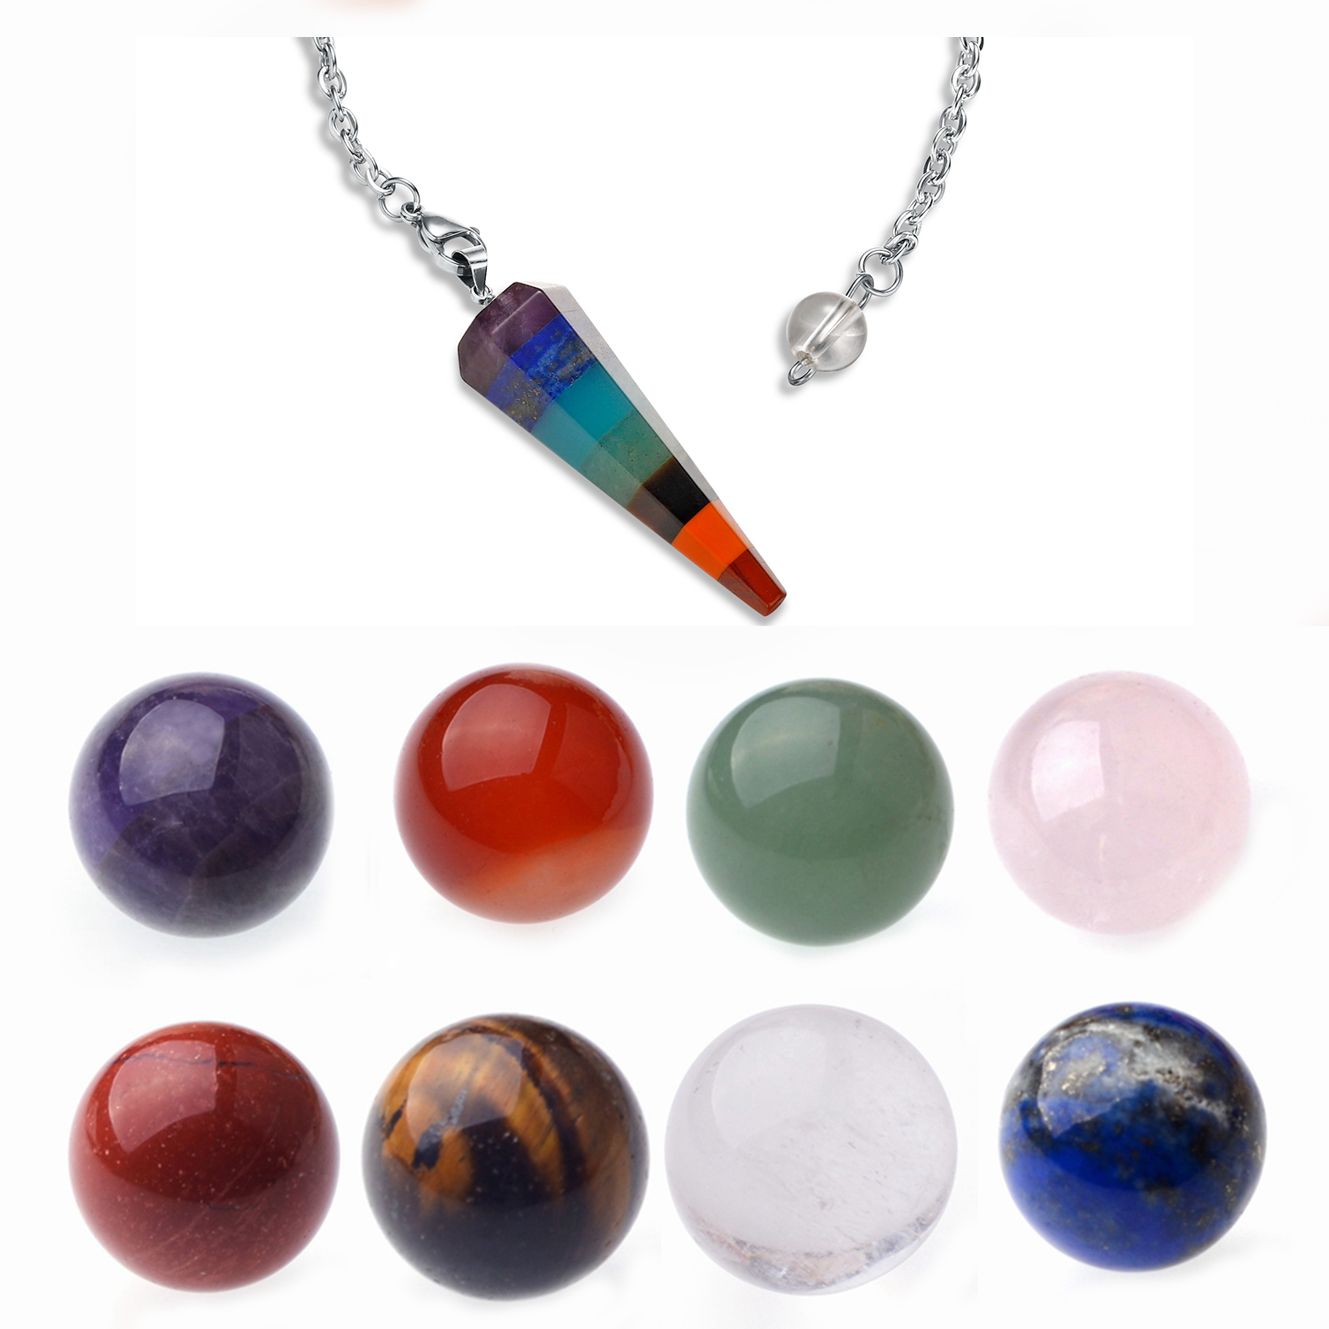 7 Chakra Necklace Pendant Beads Natural quartz Healing Gemstones Yoga Reiki Gift 